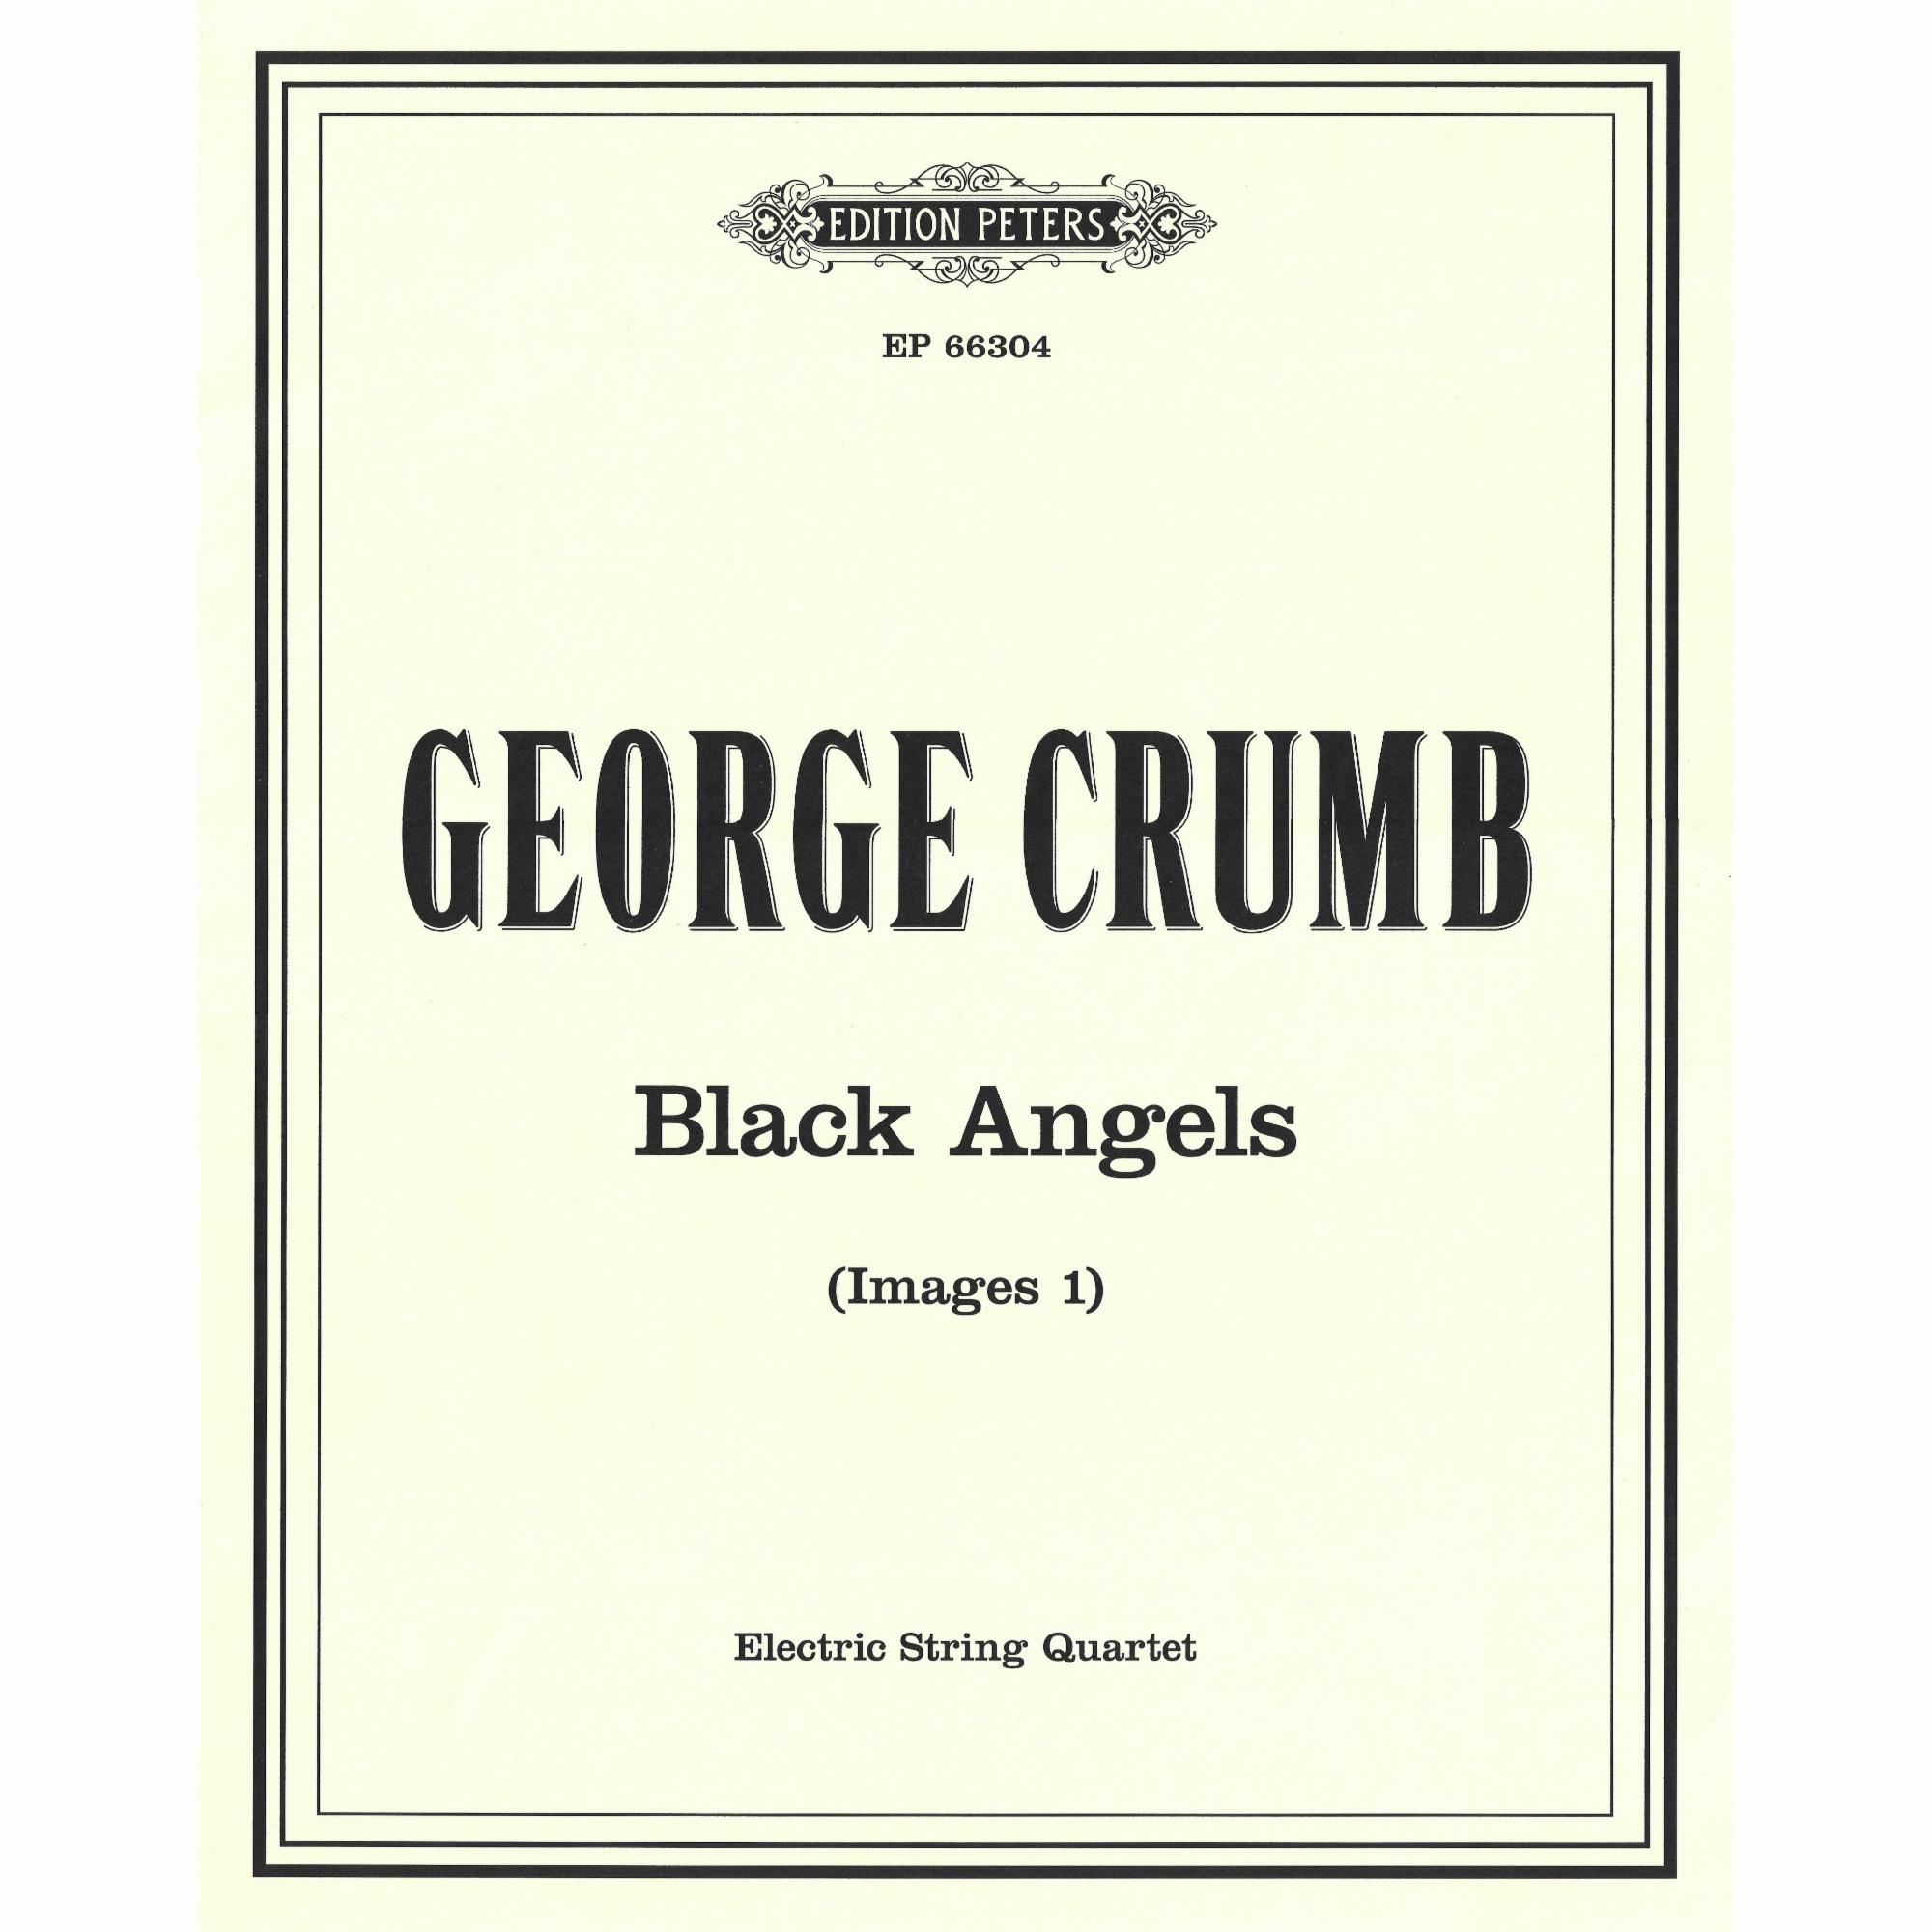 Crumb -- Black Angels for Electric String Quartet